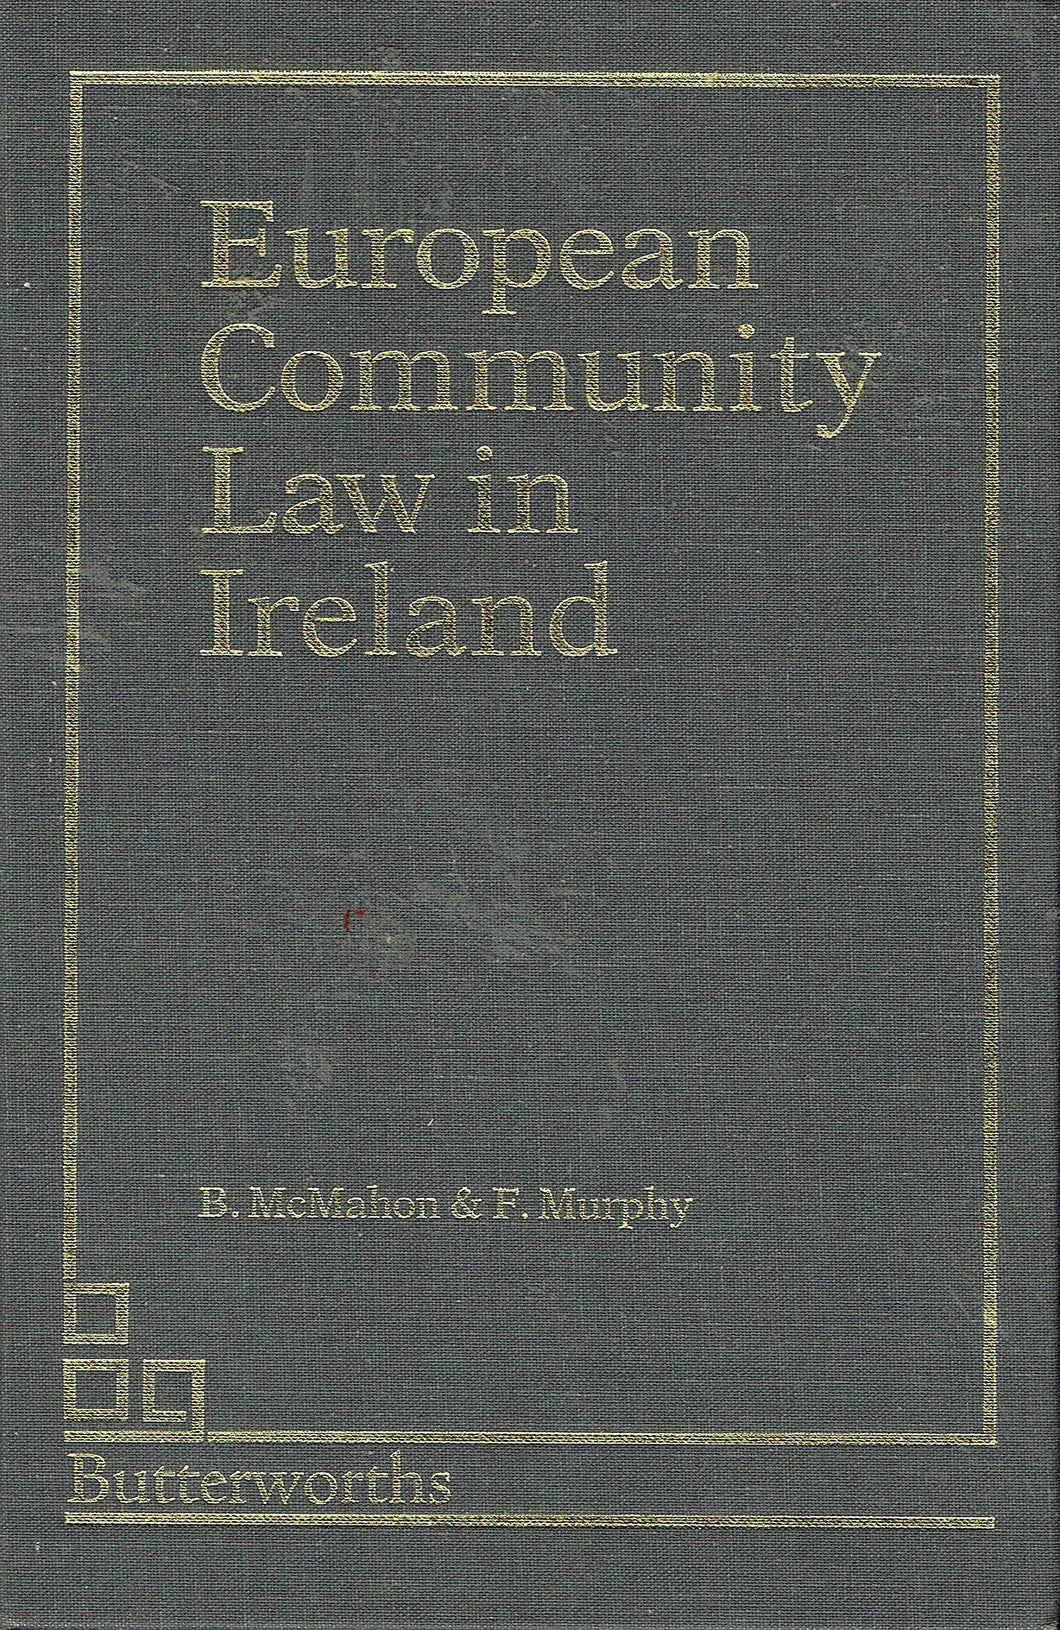 European Community Law in Ireland